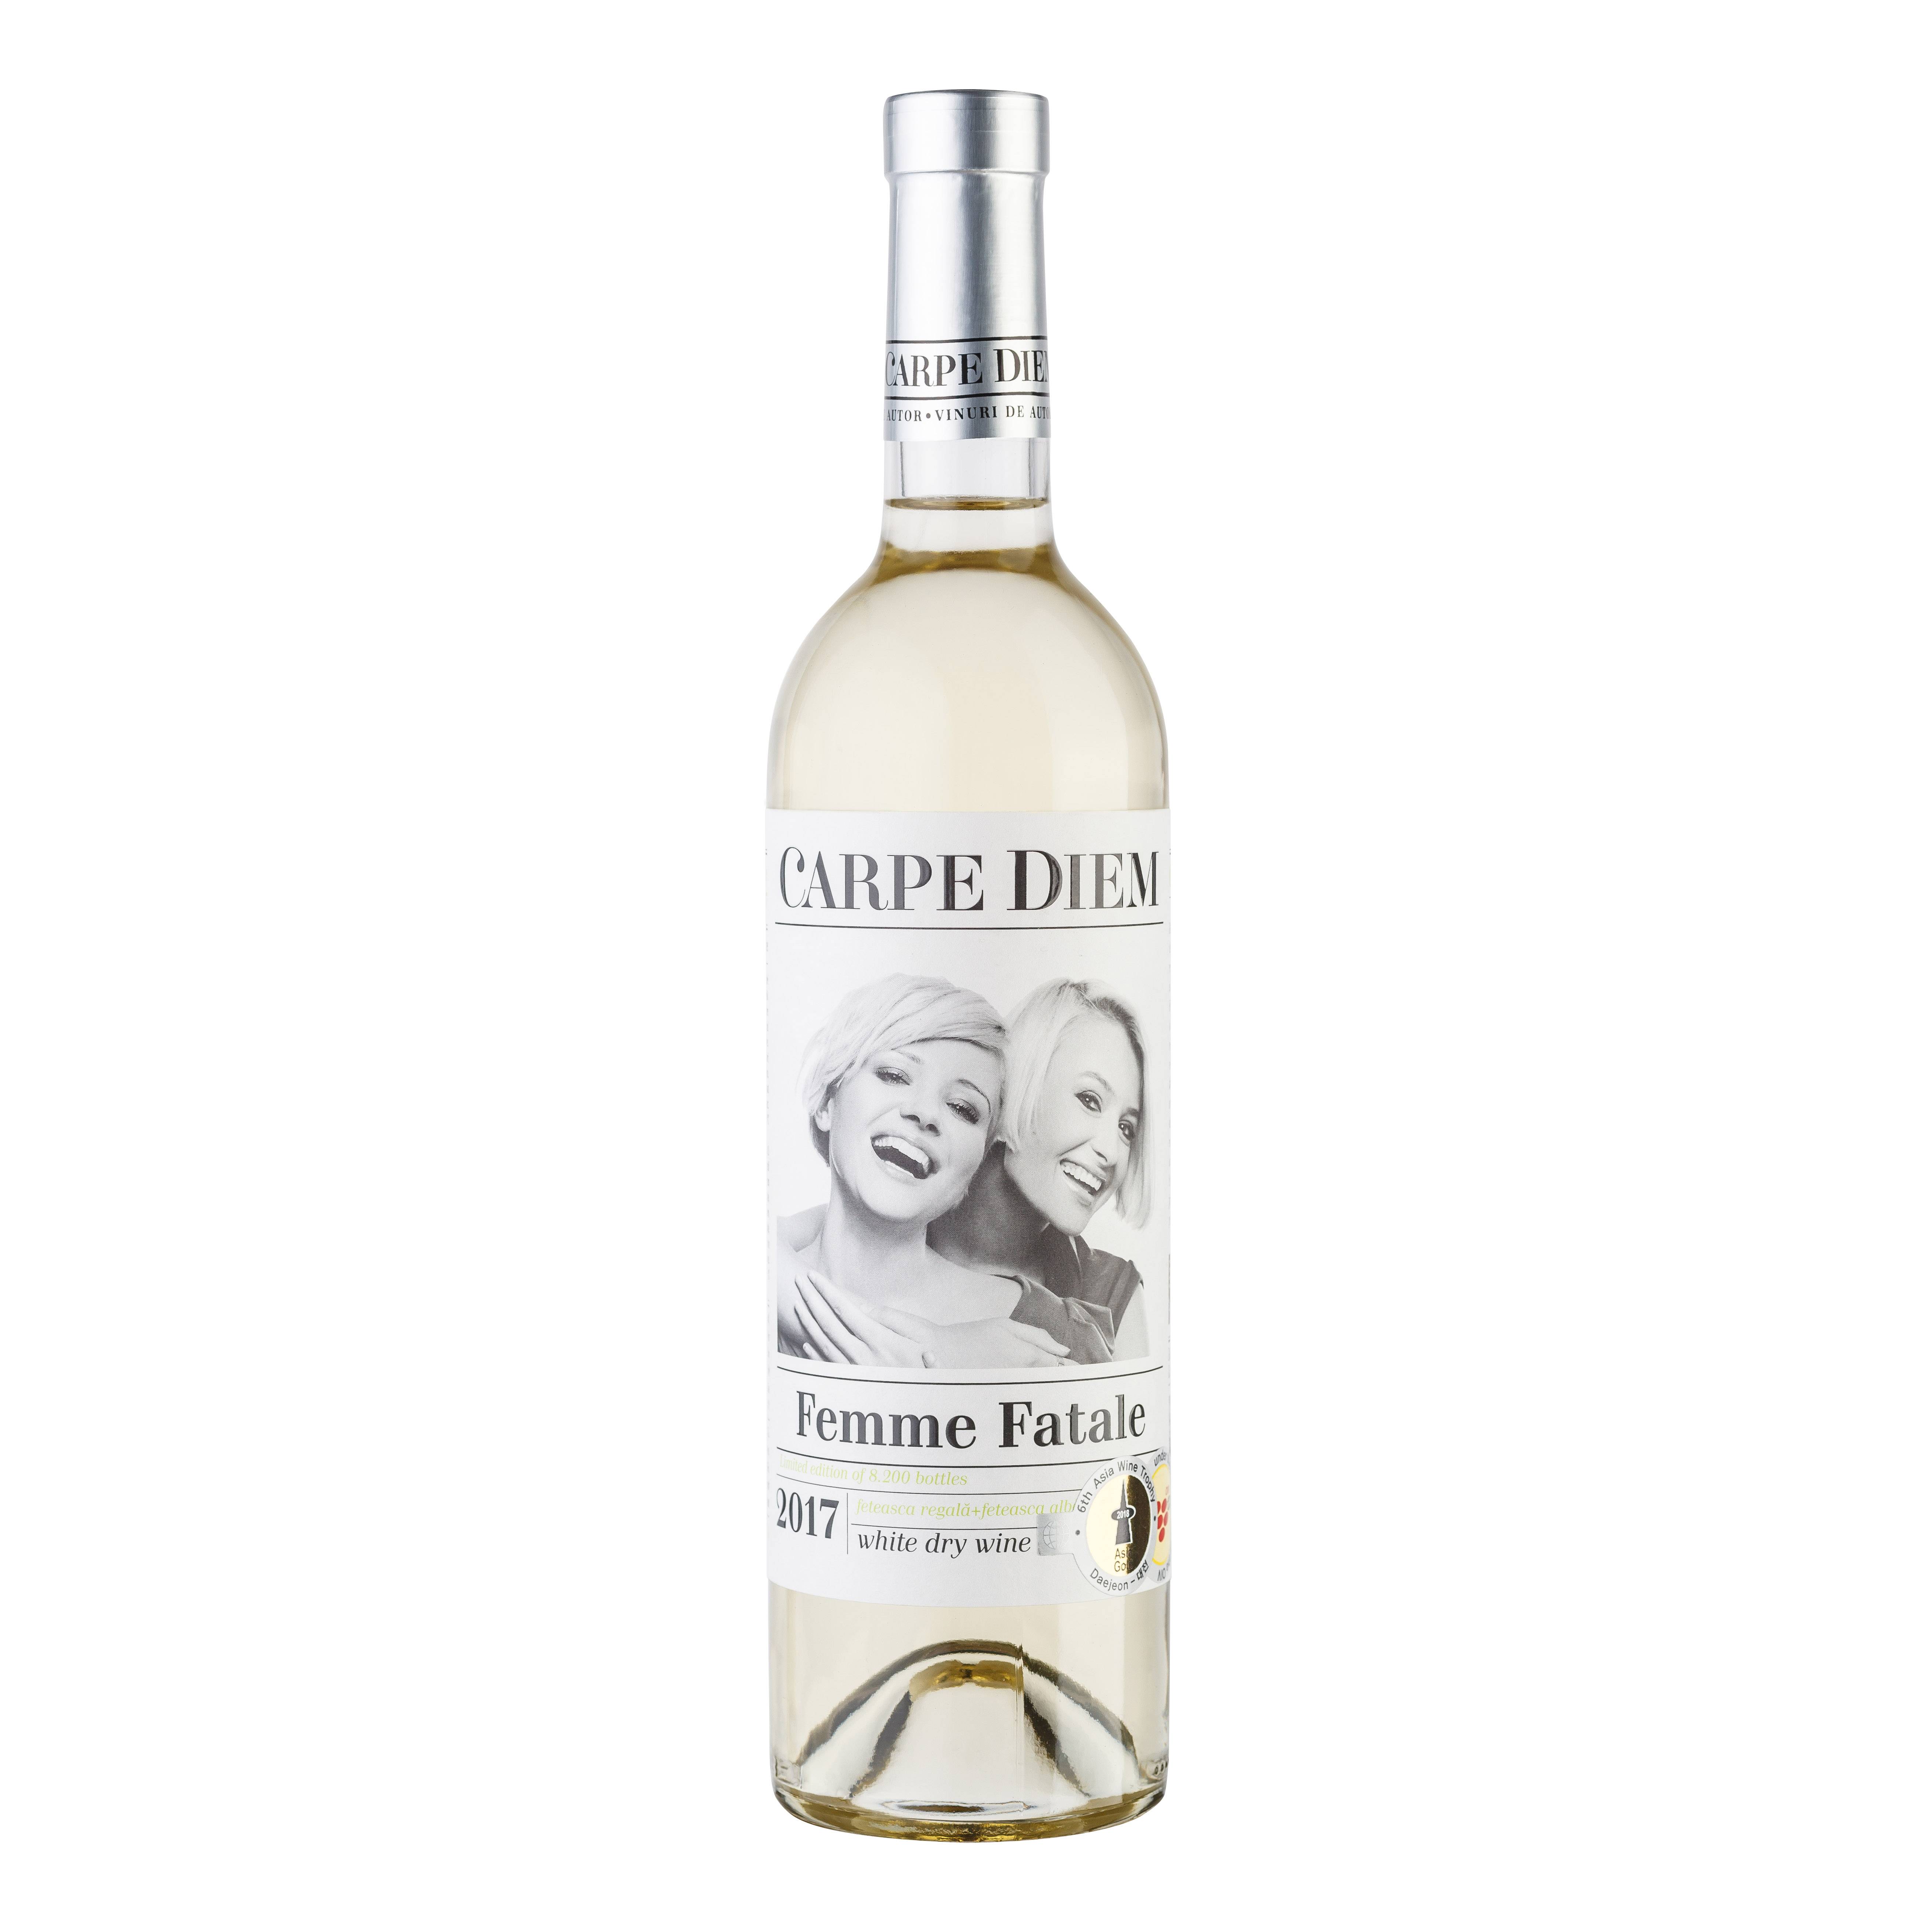  Белое сухое вино Femme Fatale 2017 Carpe Diem, 0.75 л image